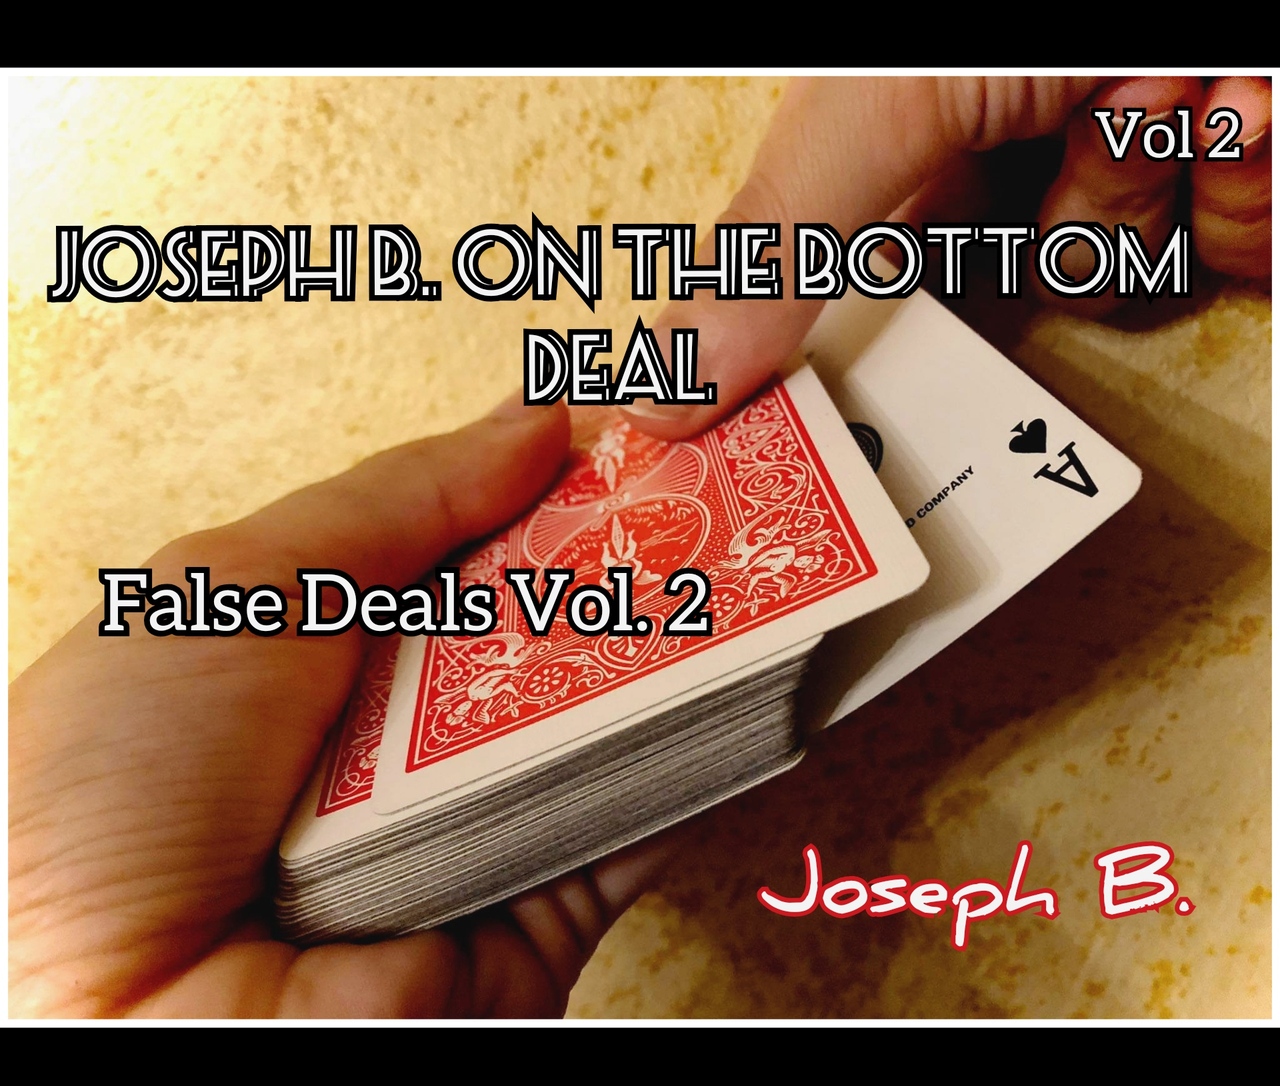 JOSEPH B. ON THE BOTTOM DEAL by Joseph B. (MP4 Video Download)